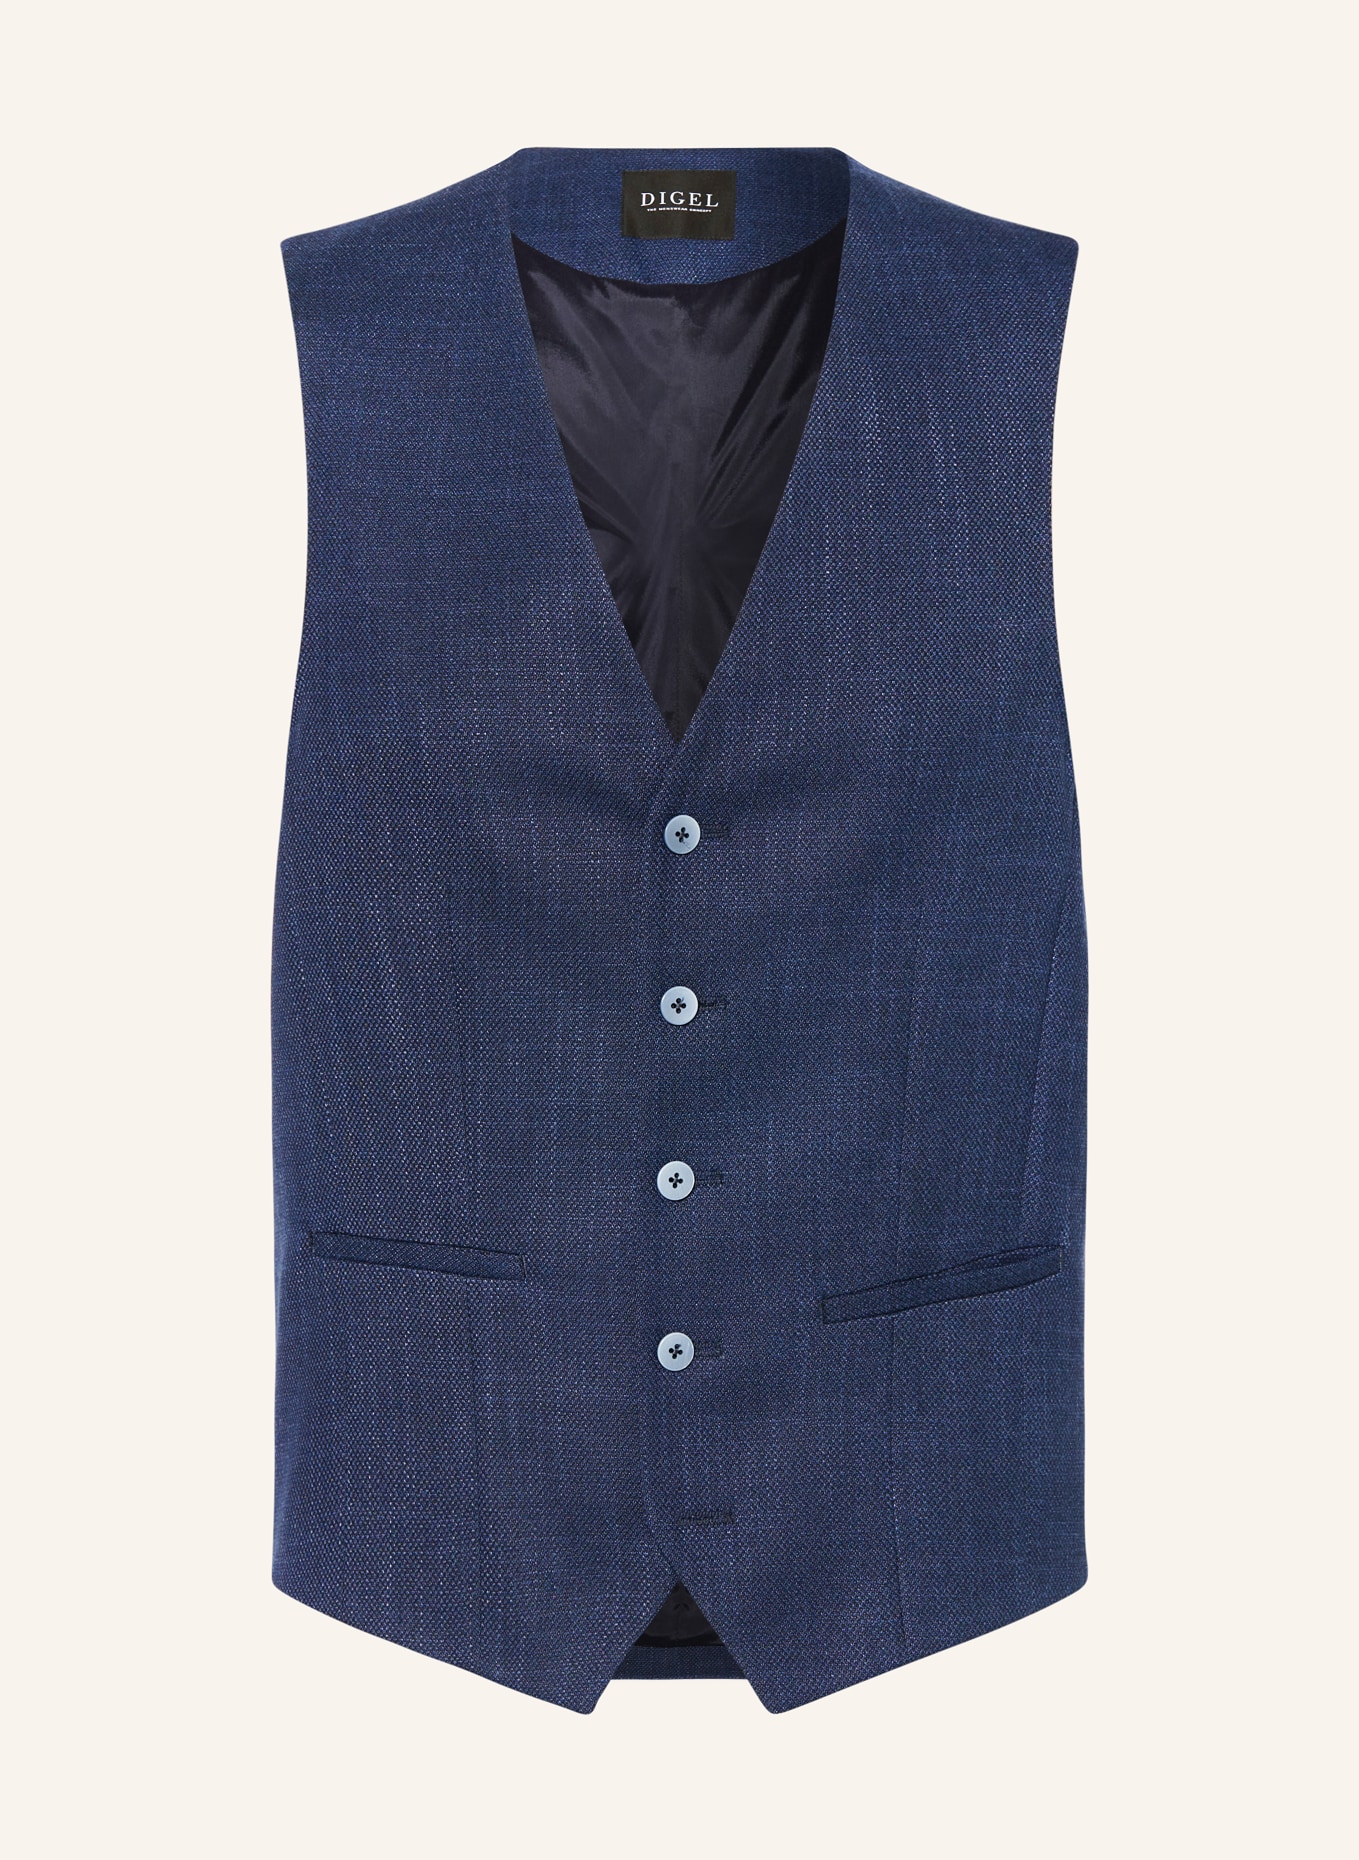 DIGEL Suit vest EDGAR modern fit, Color: 22 BLAU (Image 1)